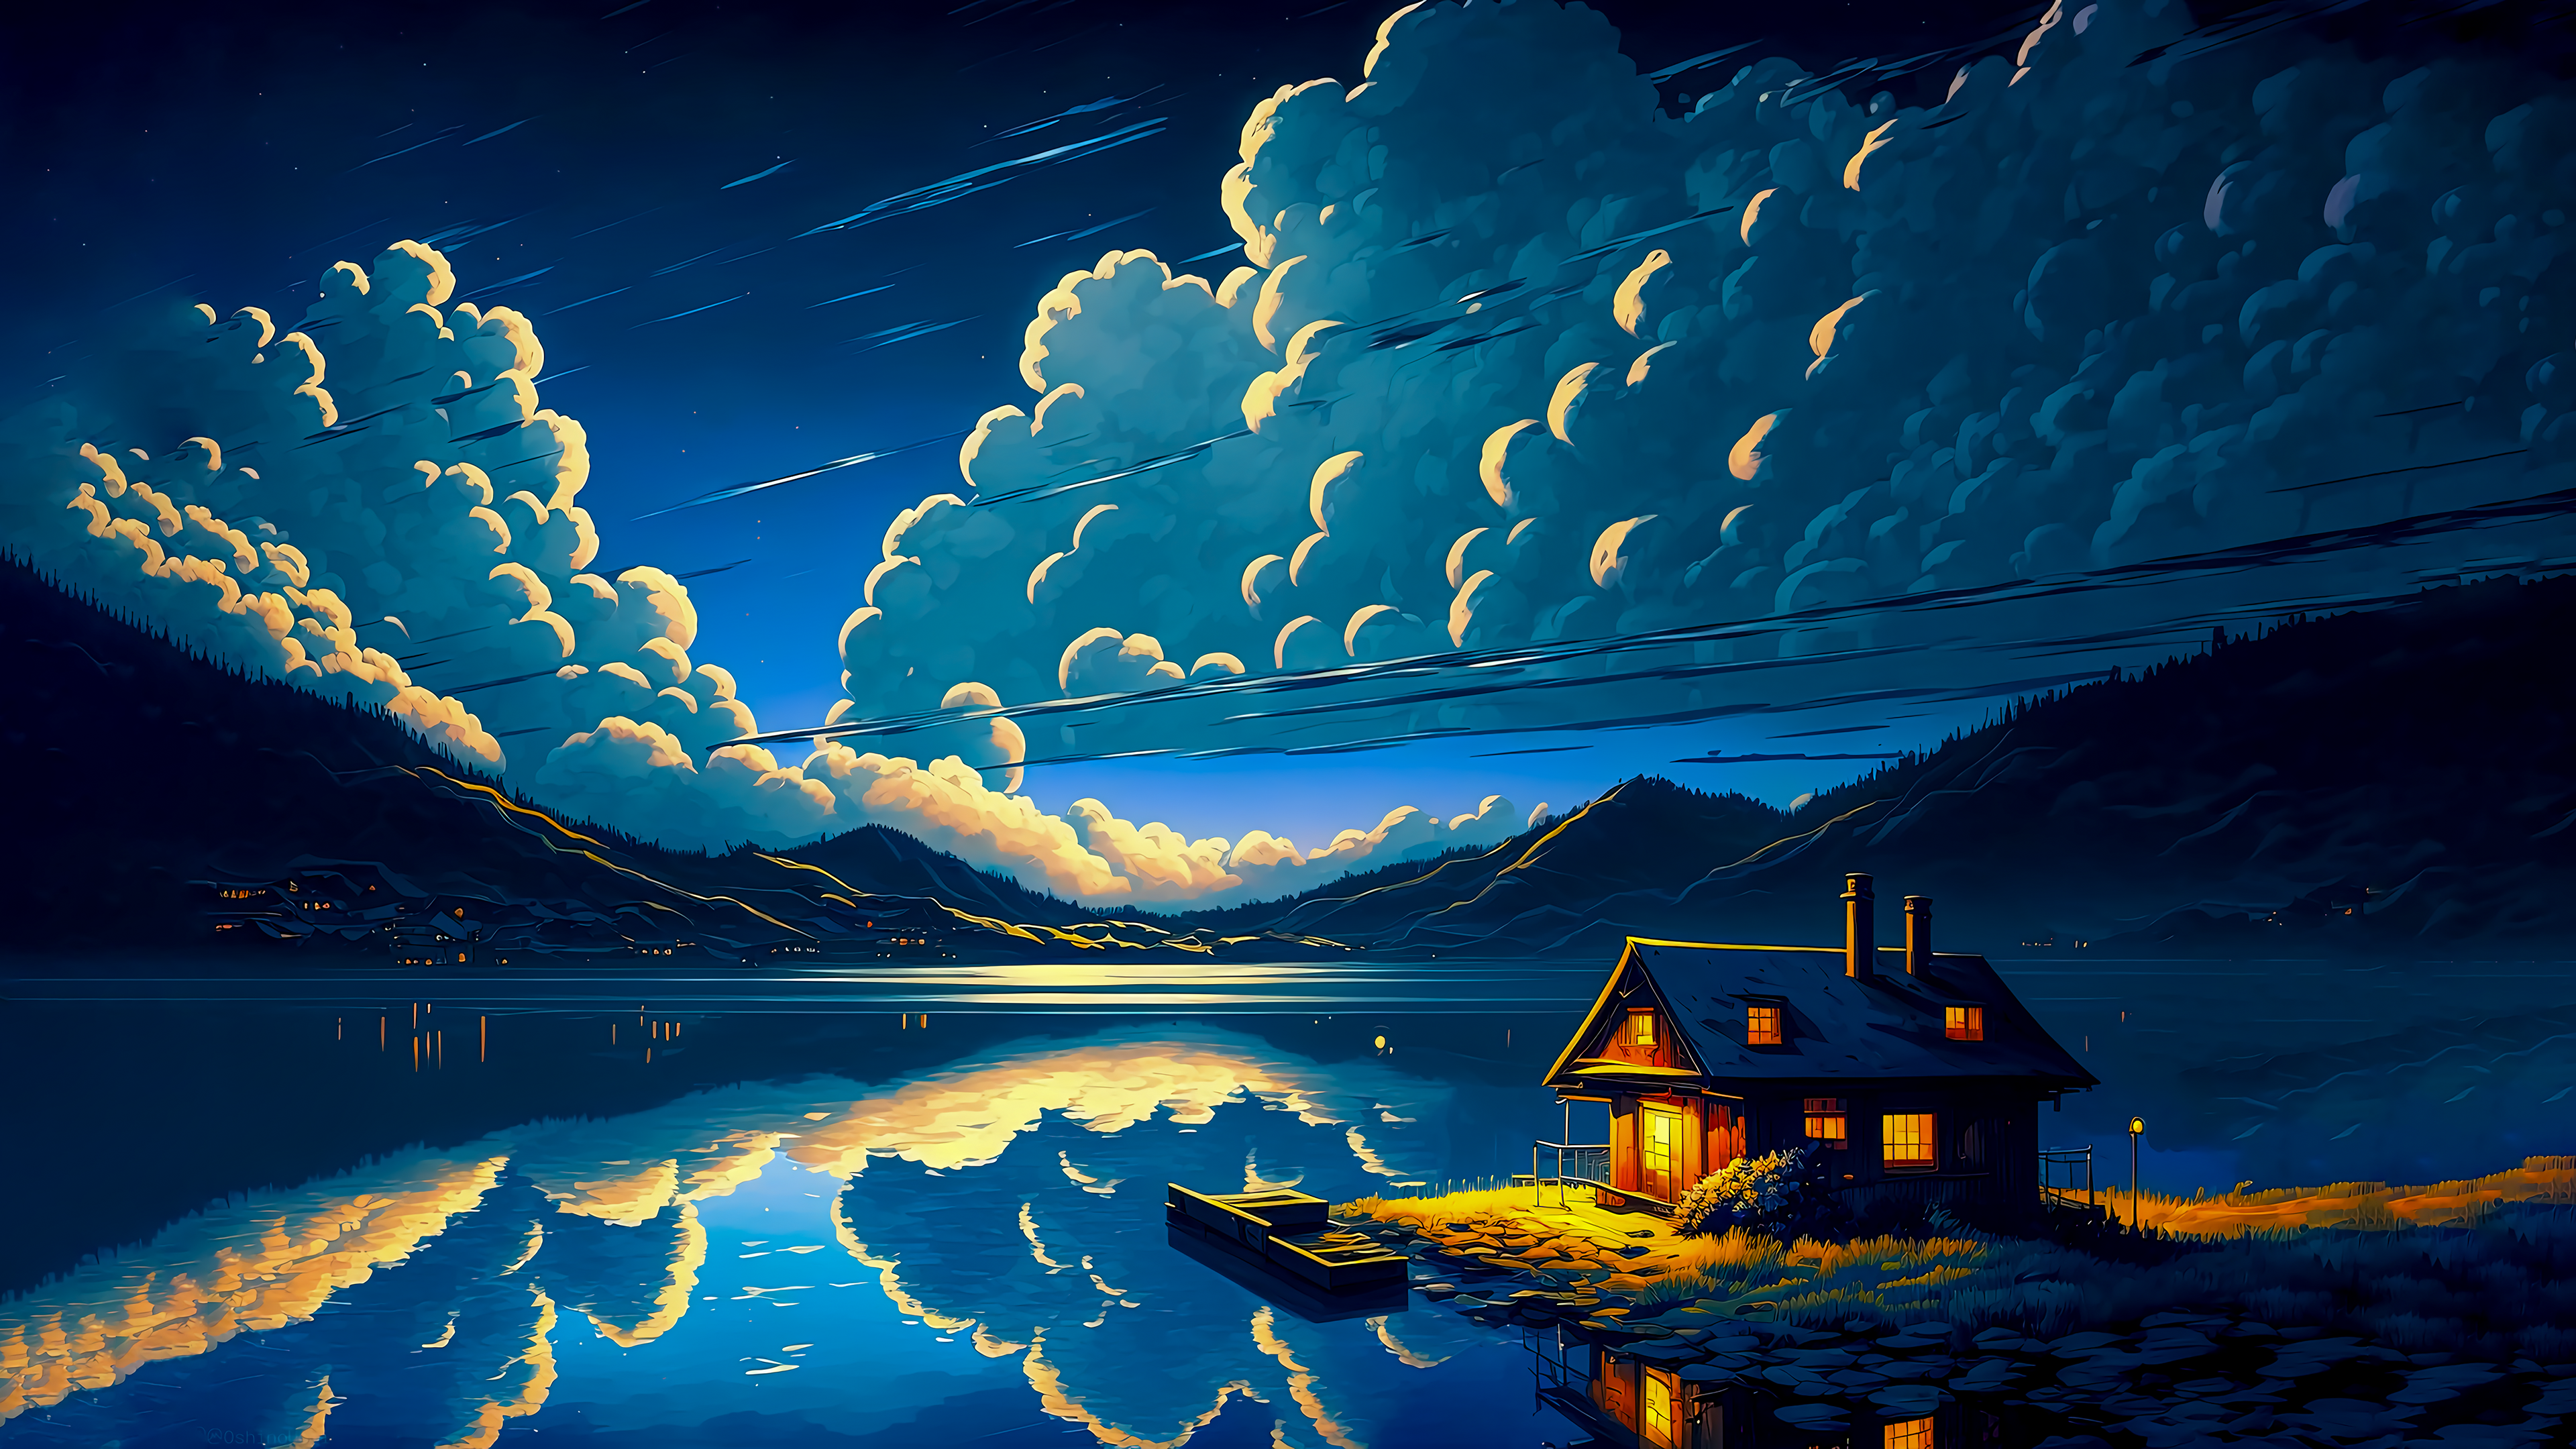 4K PC Wallpaper: Chill Lake Landscape Illustration